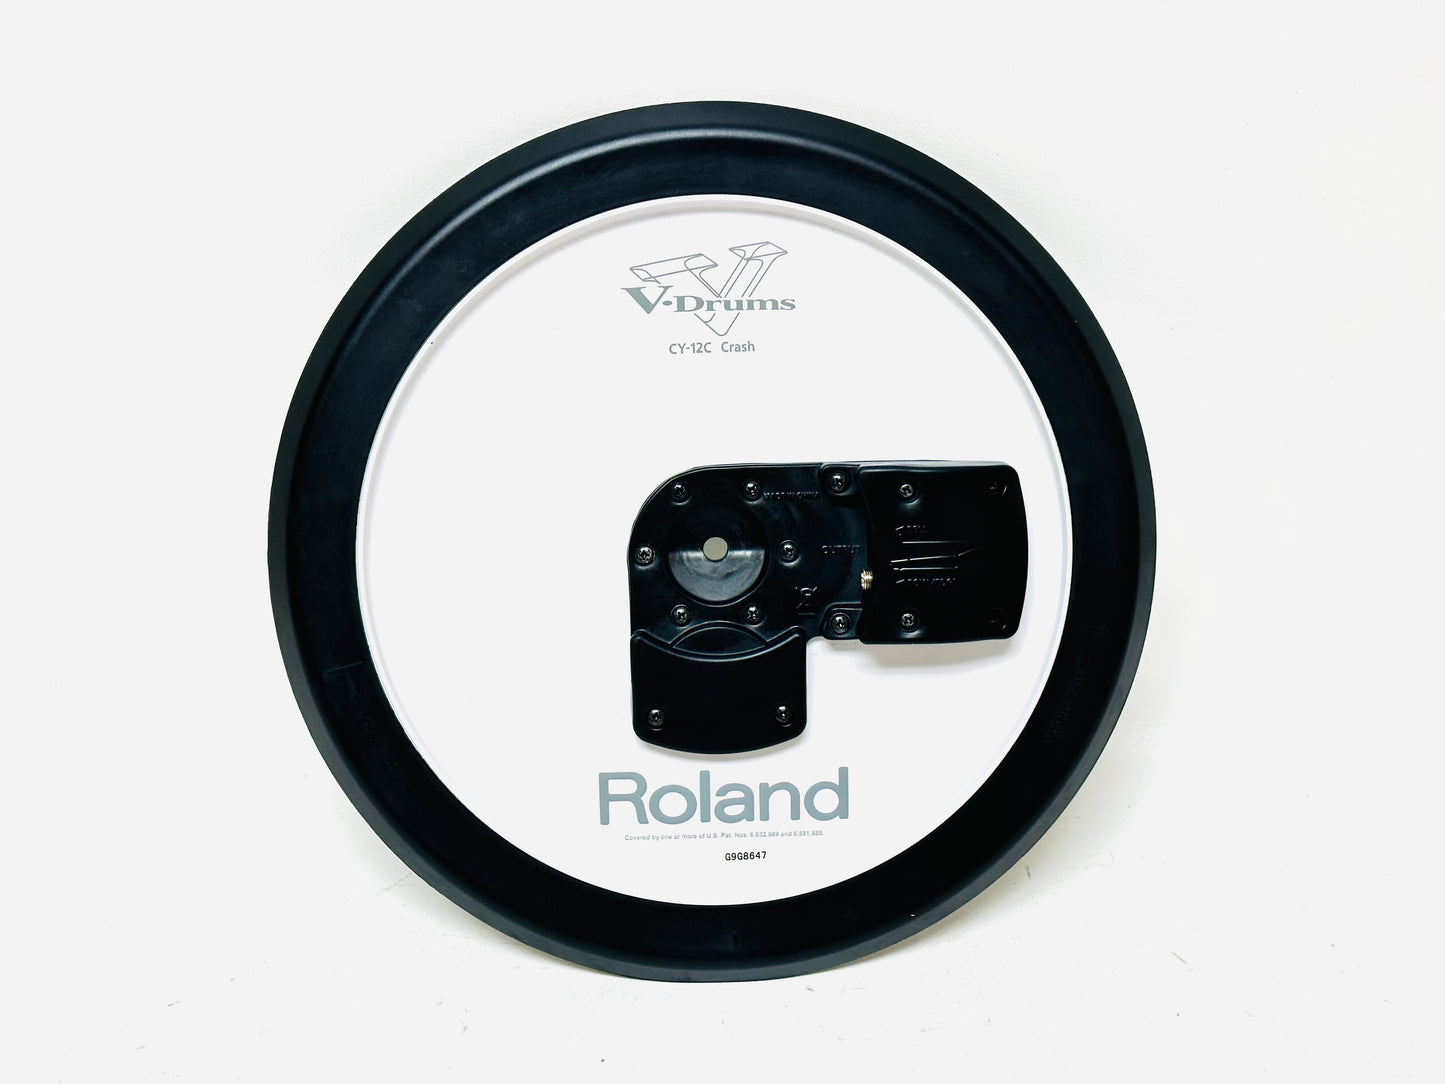 Set of Roland CY-13R ride white/CY12C crash white backs